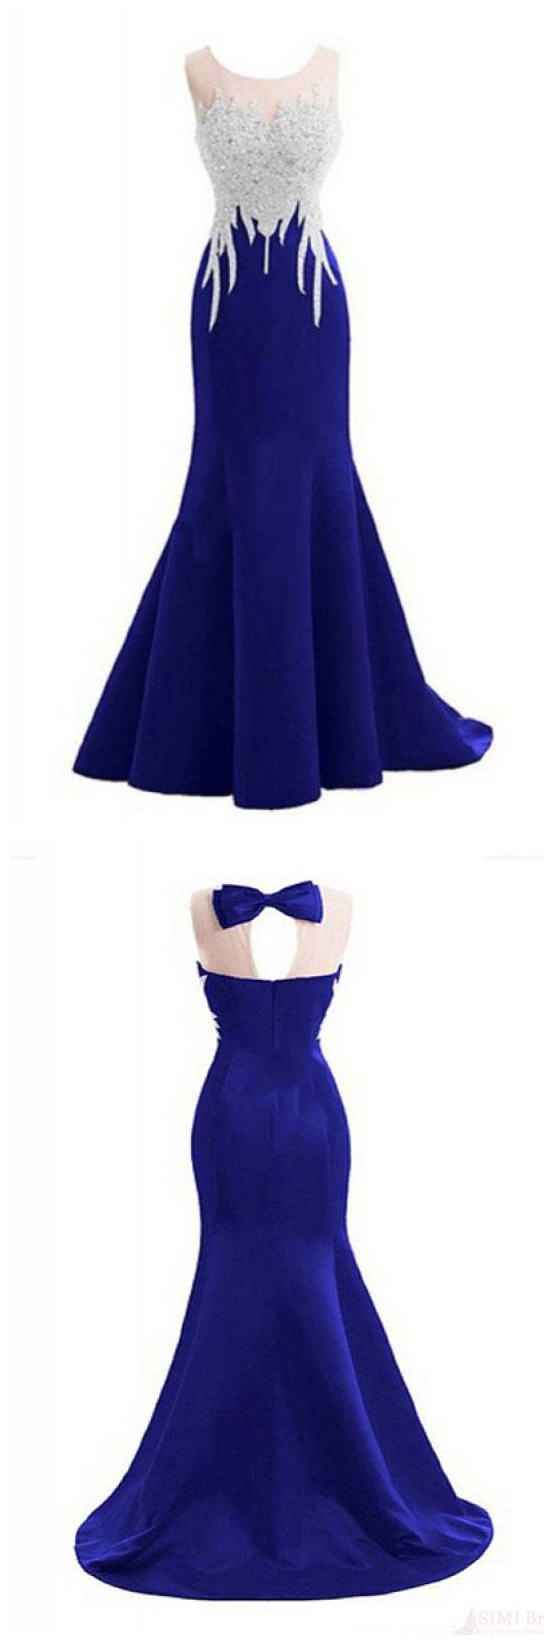 O-neck Beading Bodice Mermaid Long Prom Dresses Royal Blue Evening Dresses